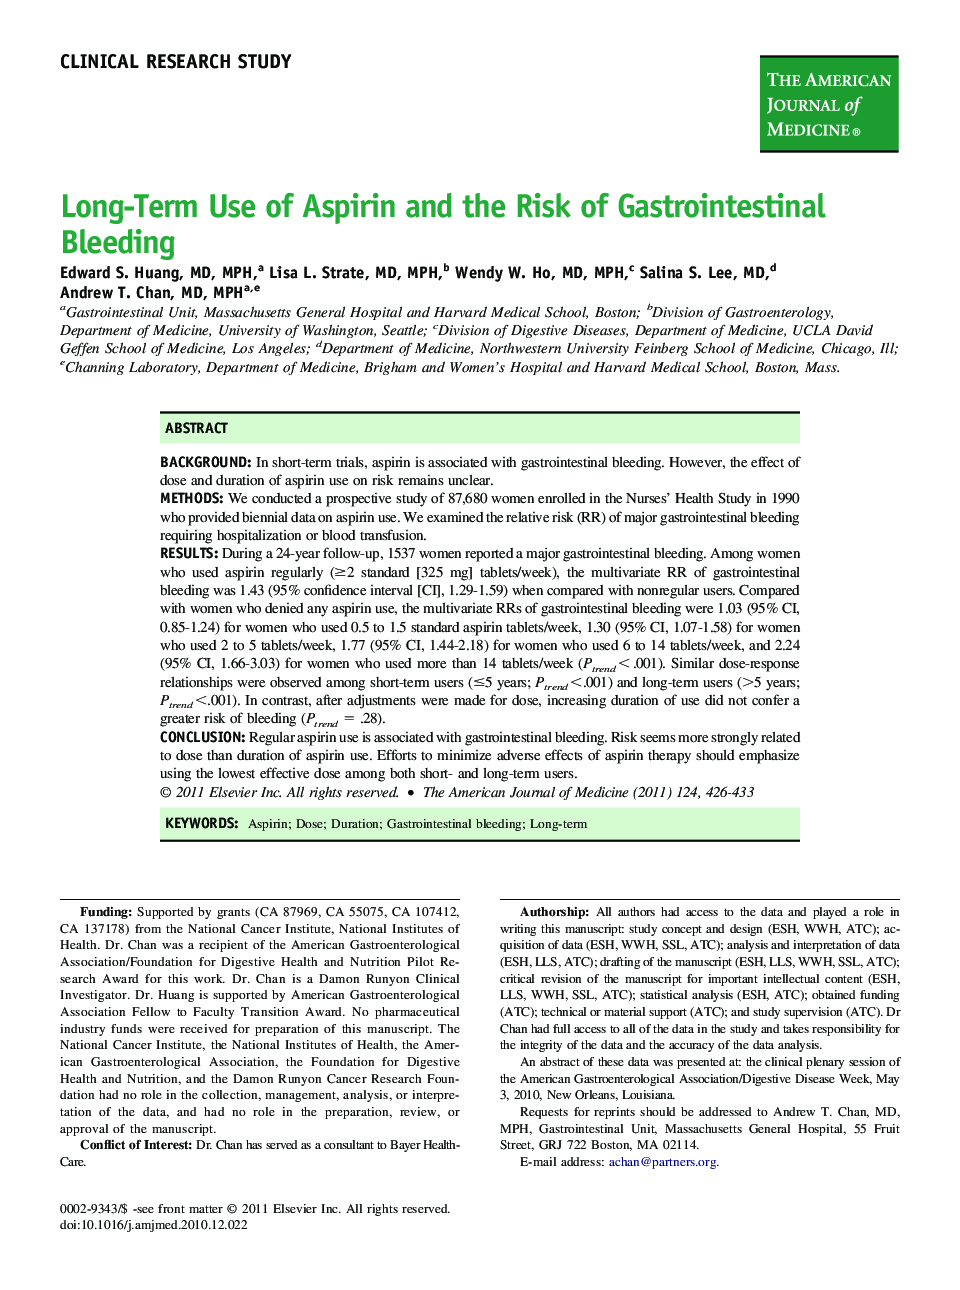 Long-Term Use of Aspirin and the Risk of Gastrointestinal Bleeding 